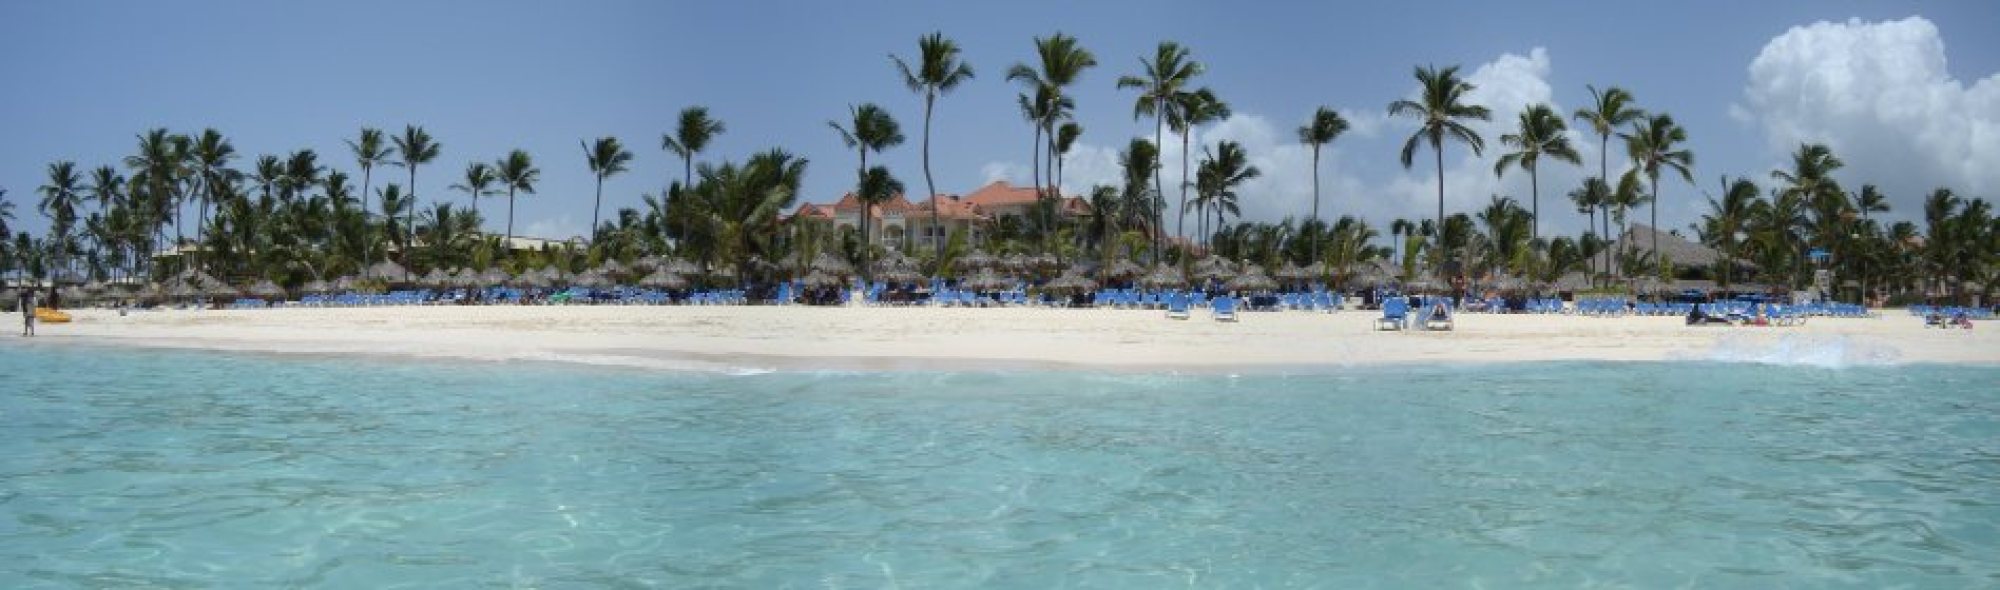 Super oferta Punta Cana all inclusive